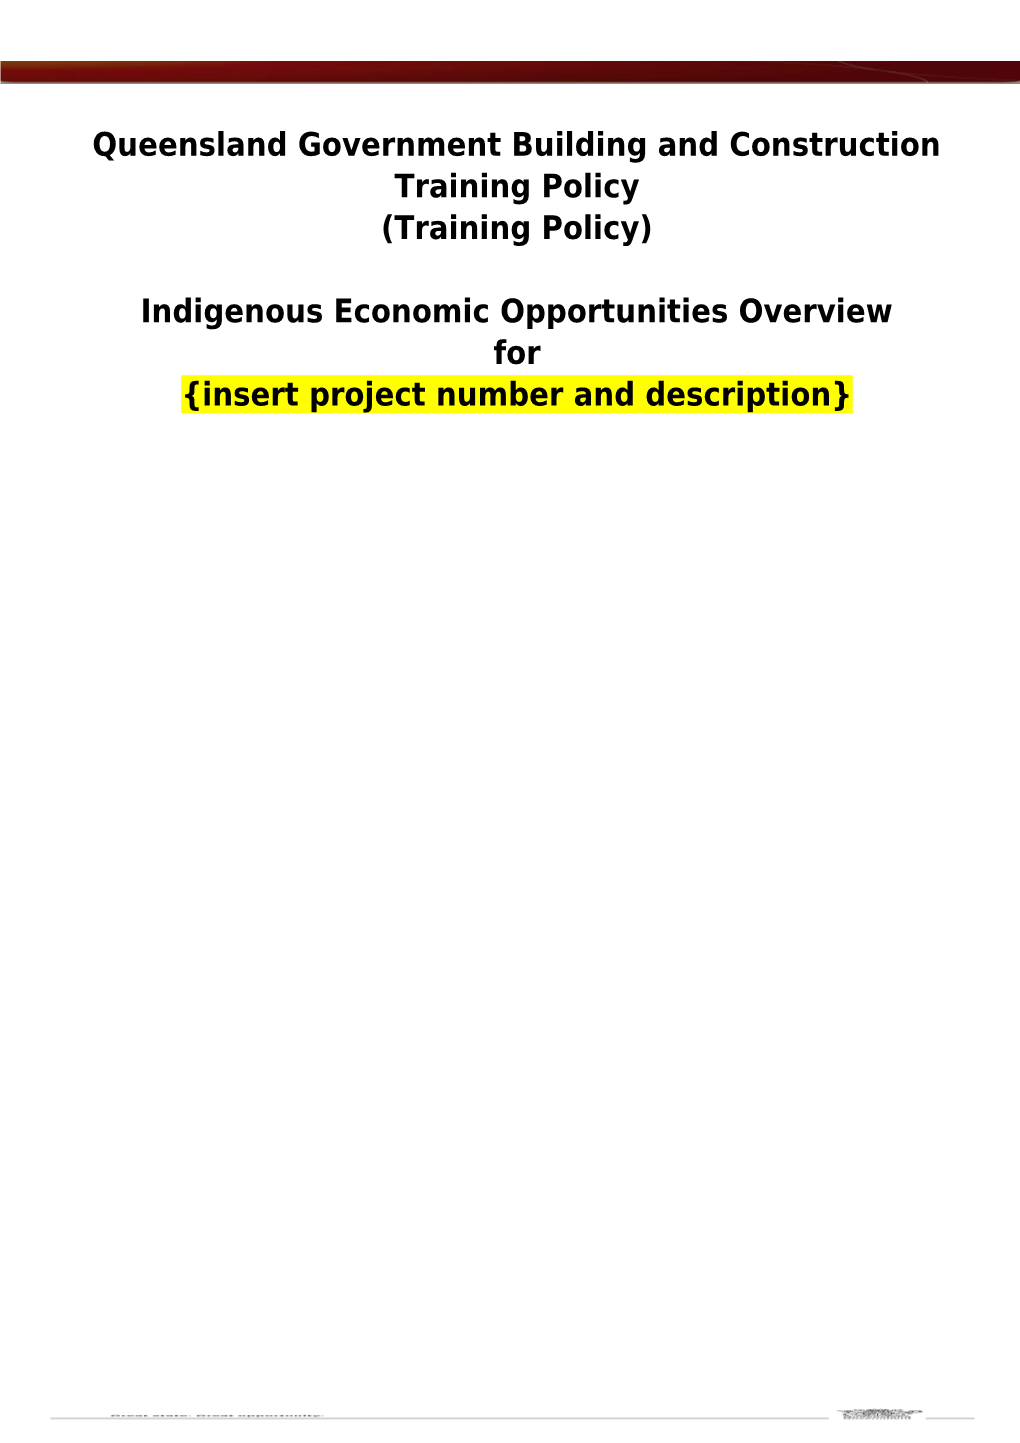 Indigenous Economic Opportunities Overview